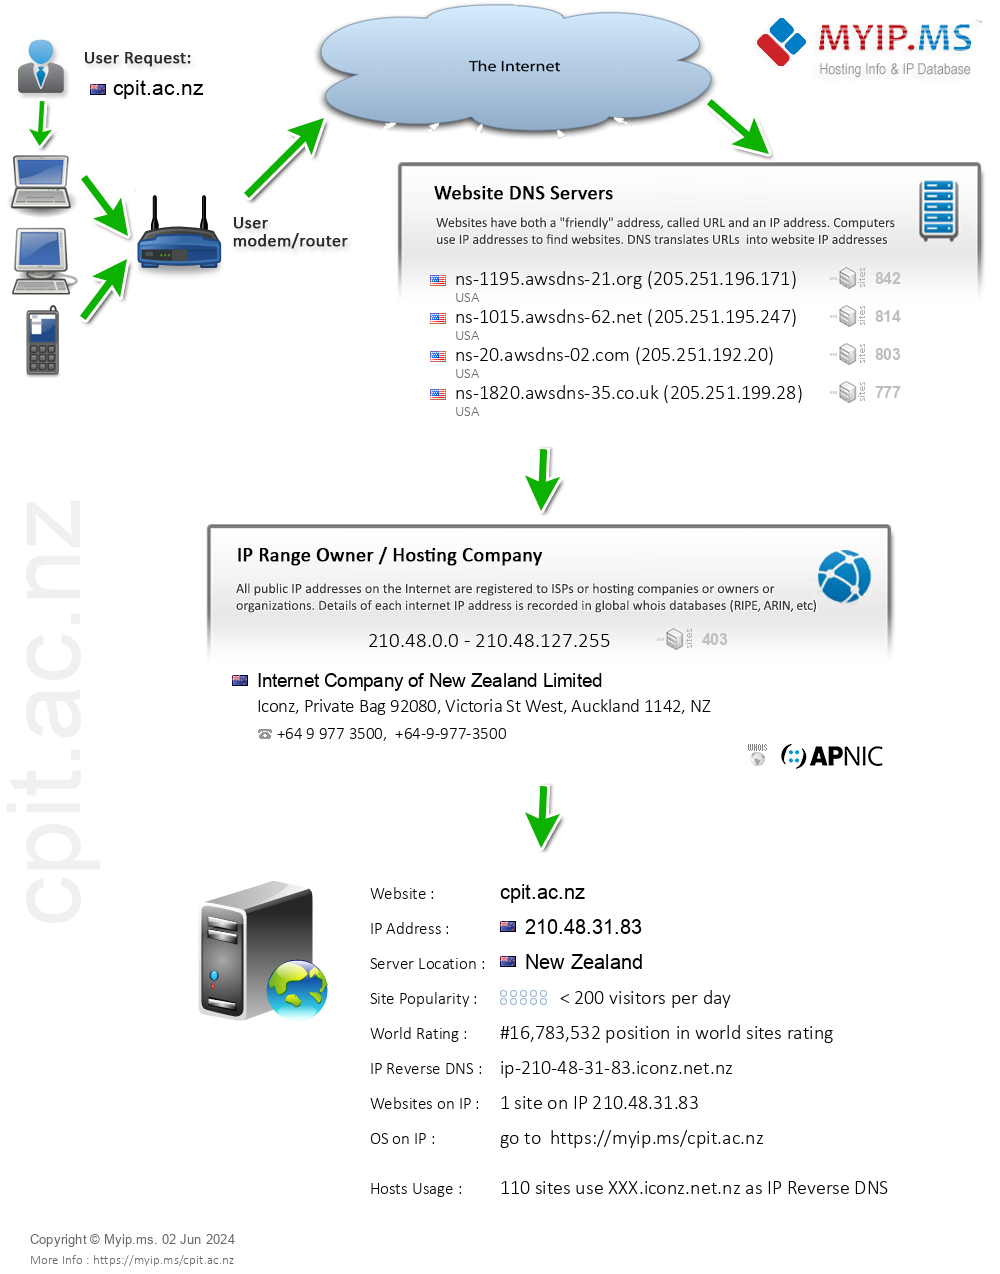 Cpit.ac.nz - Website Hosting Visual IP Diagram